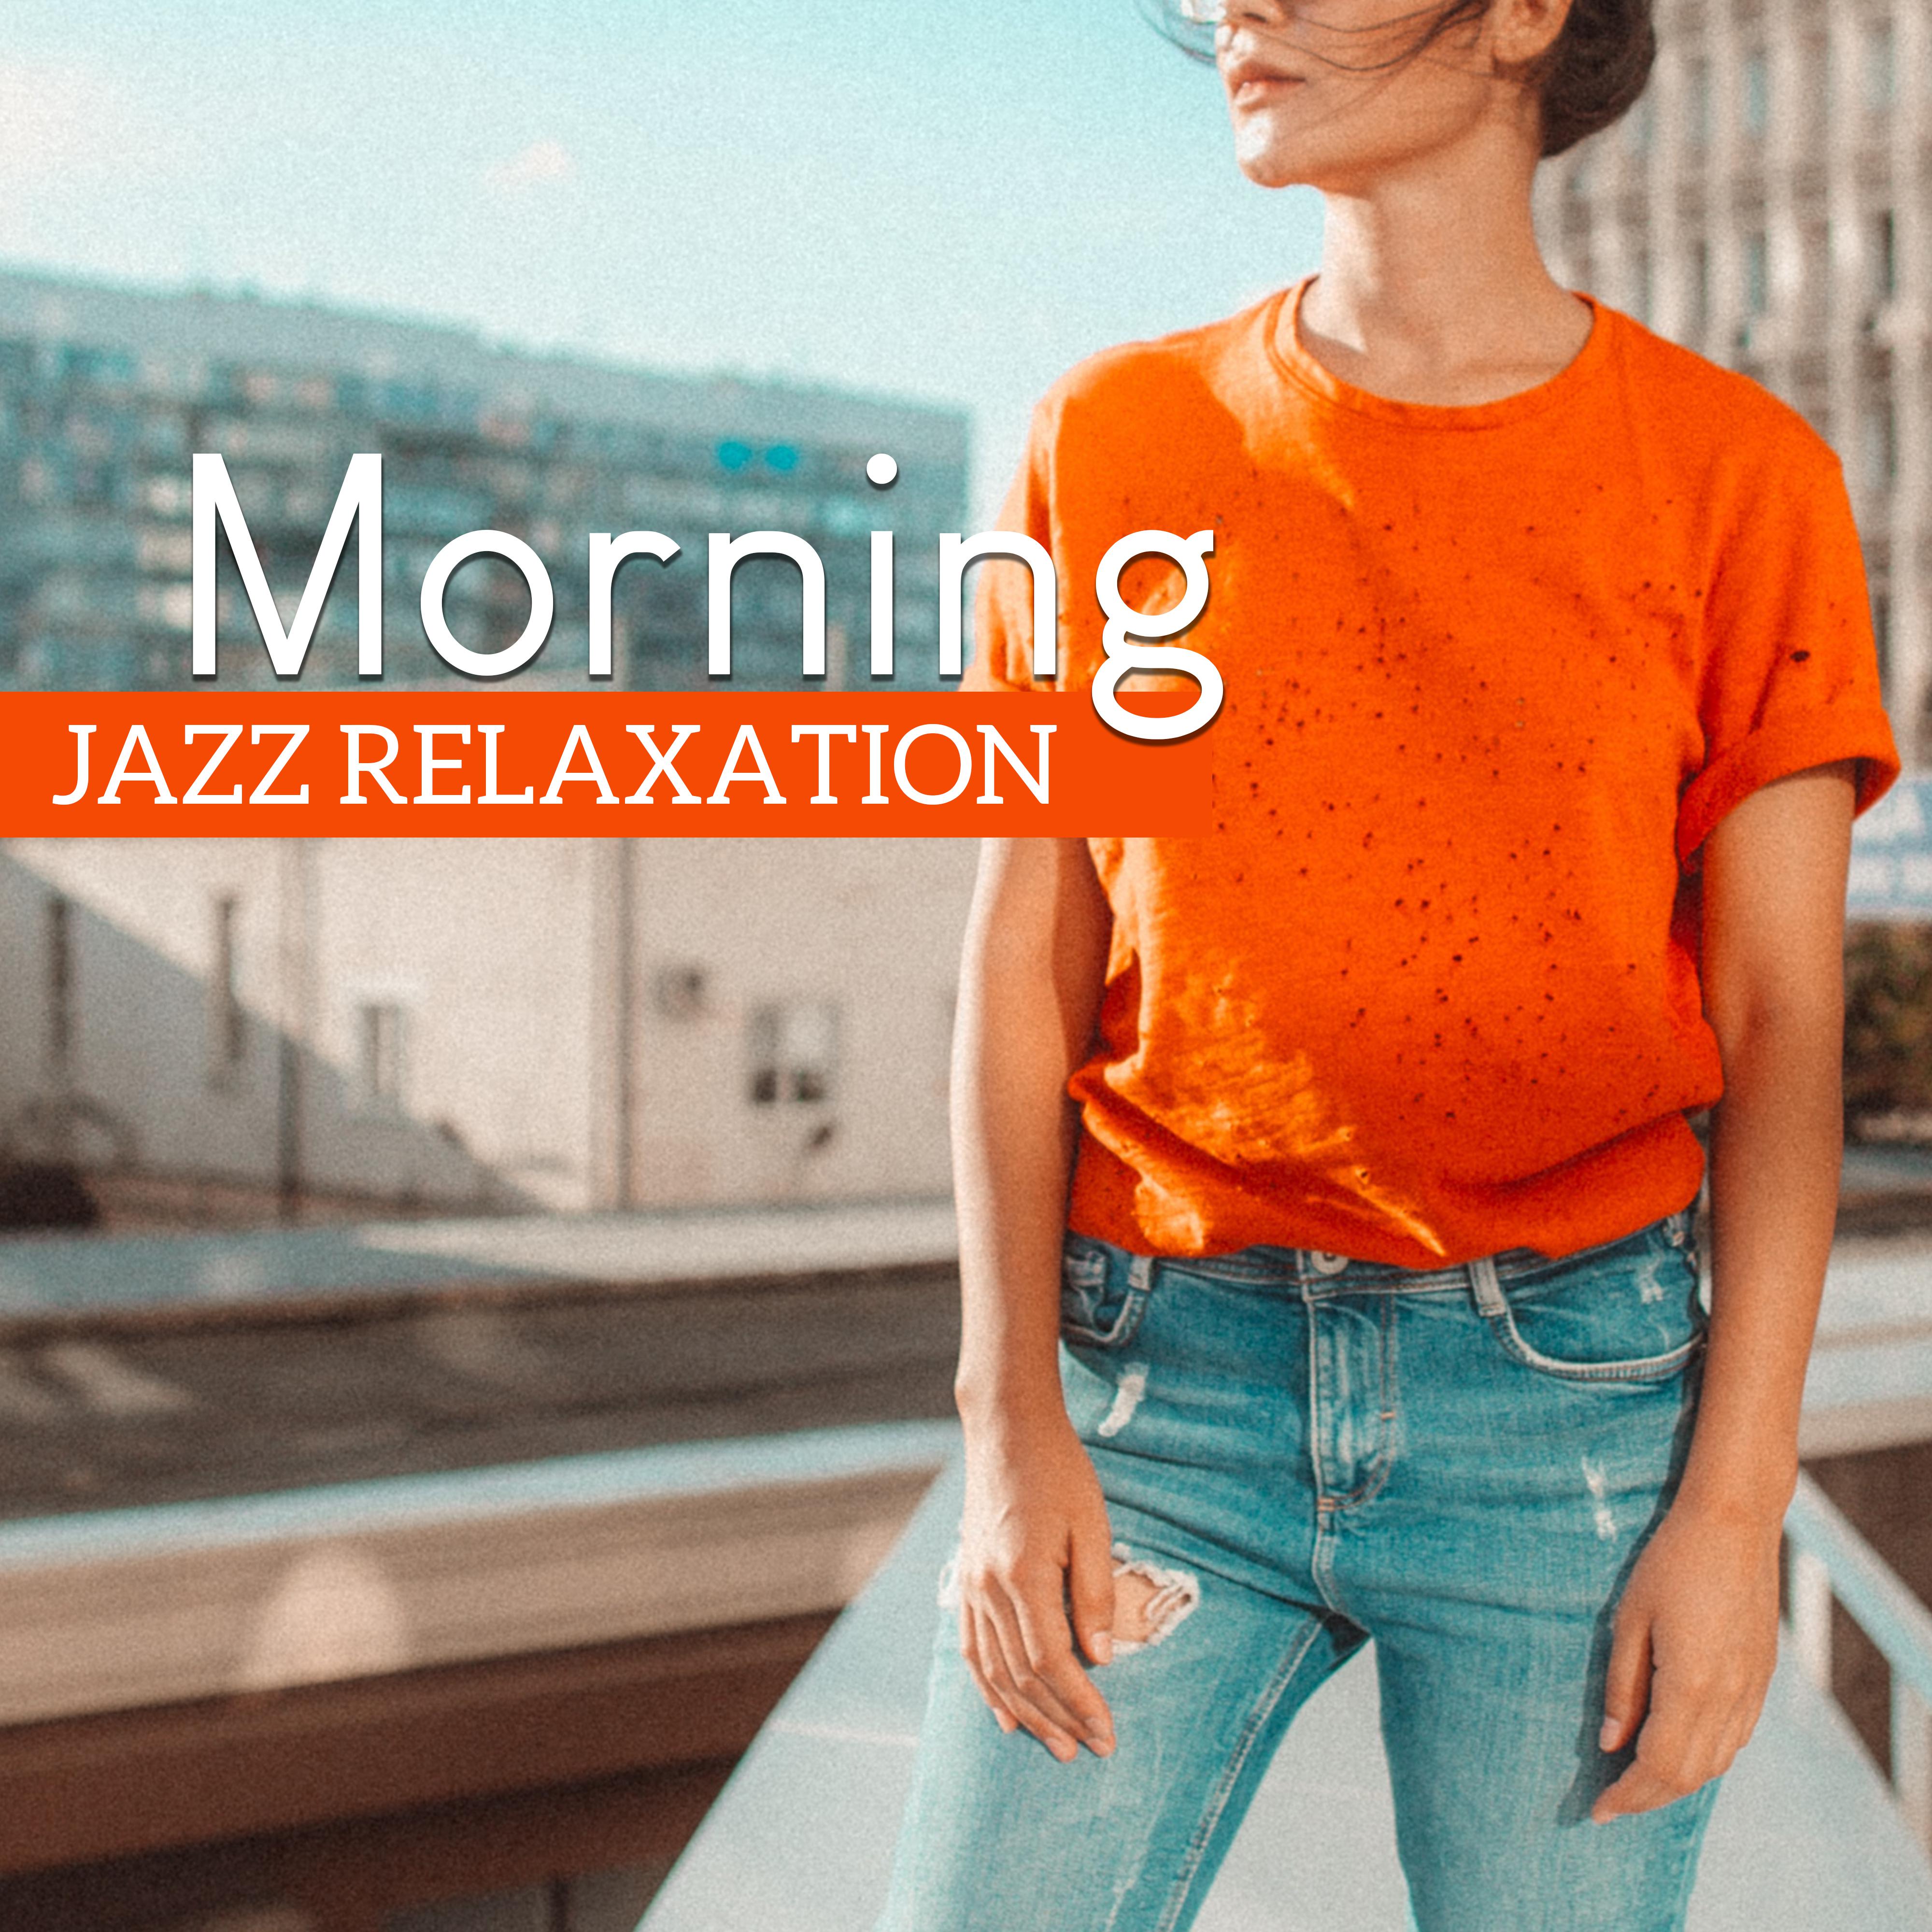 Morning Jazz Relaxation